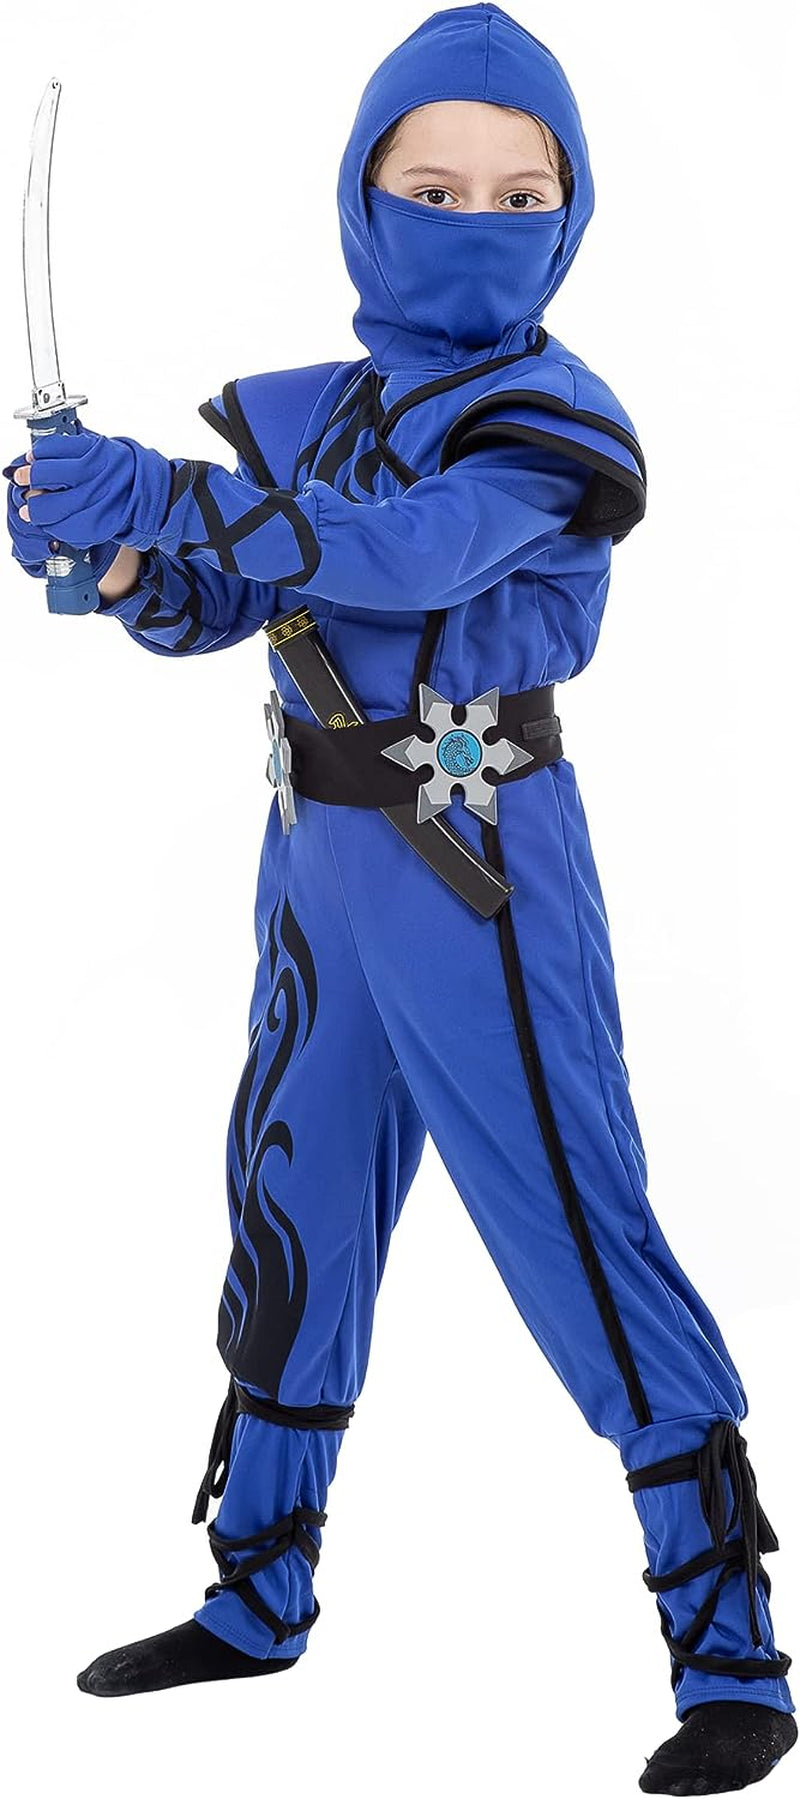 JAZGROM Blue Ninja Costume for Kids Boys Halloween Kung Fu Outfit Muscle Costume with Ninja Foam Accessories  JAZGROM   